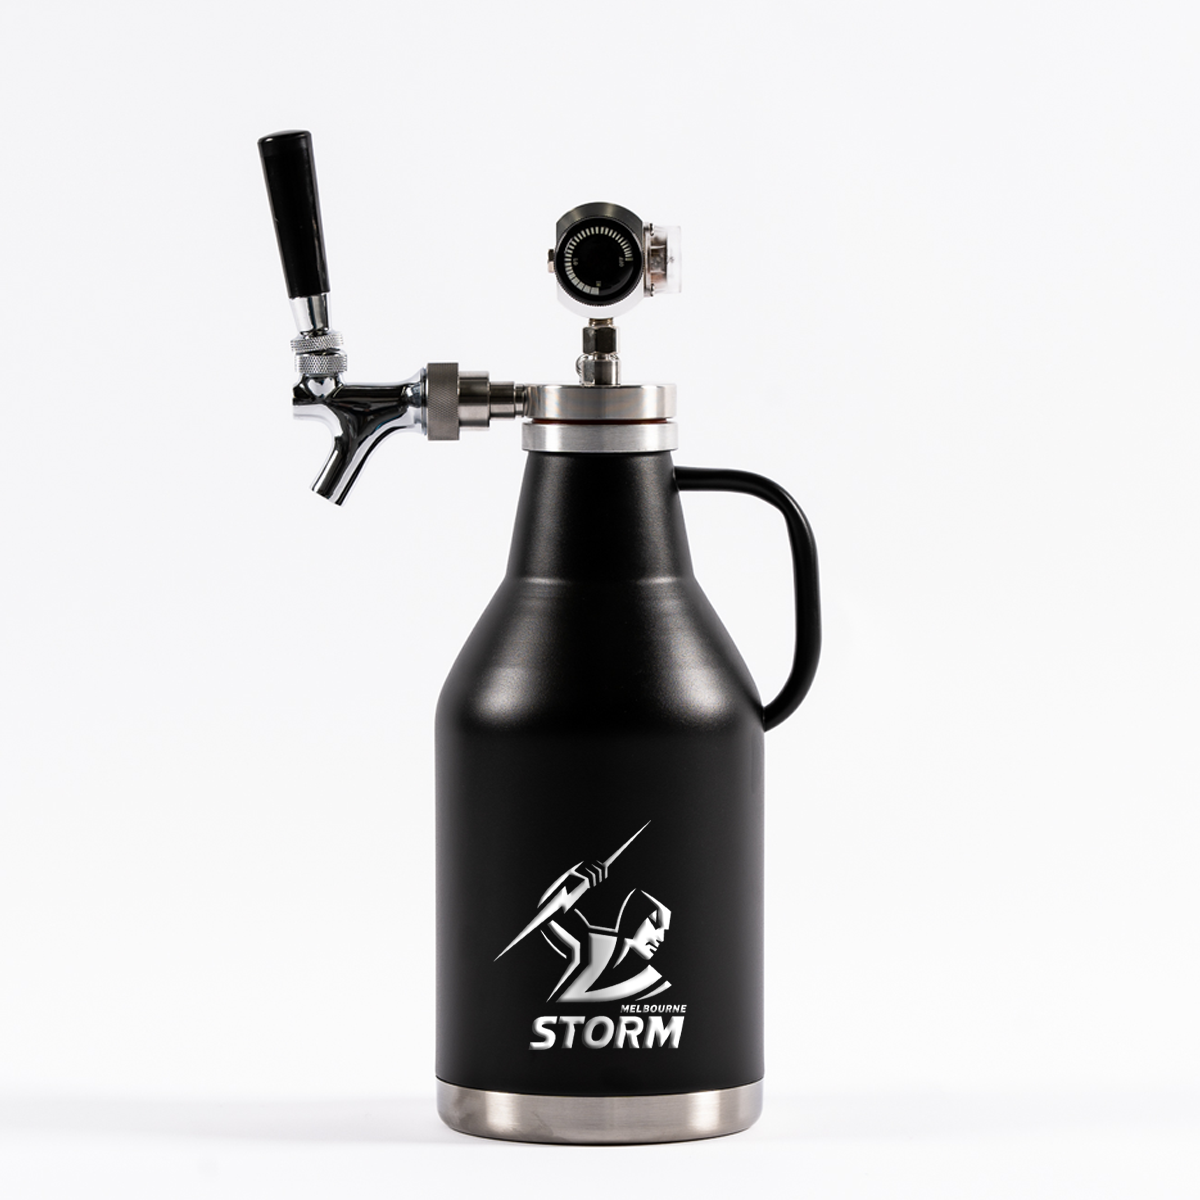 Melbourne Storm NRL Beer Growler 2L With Tap System